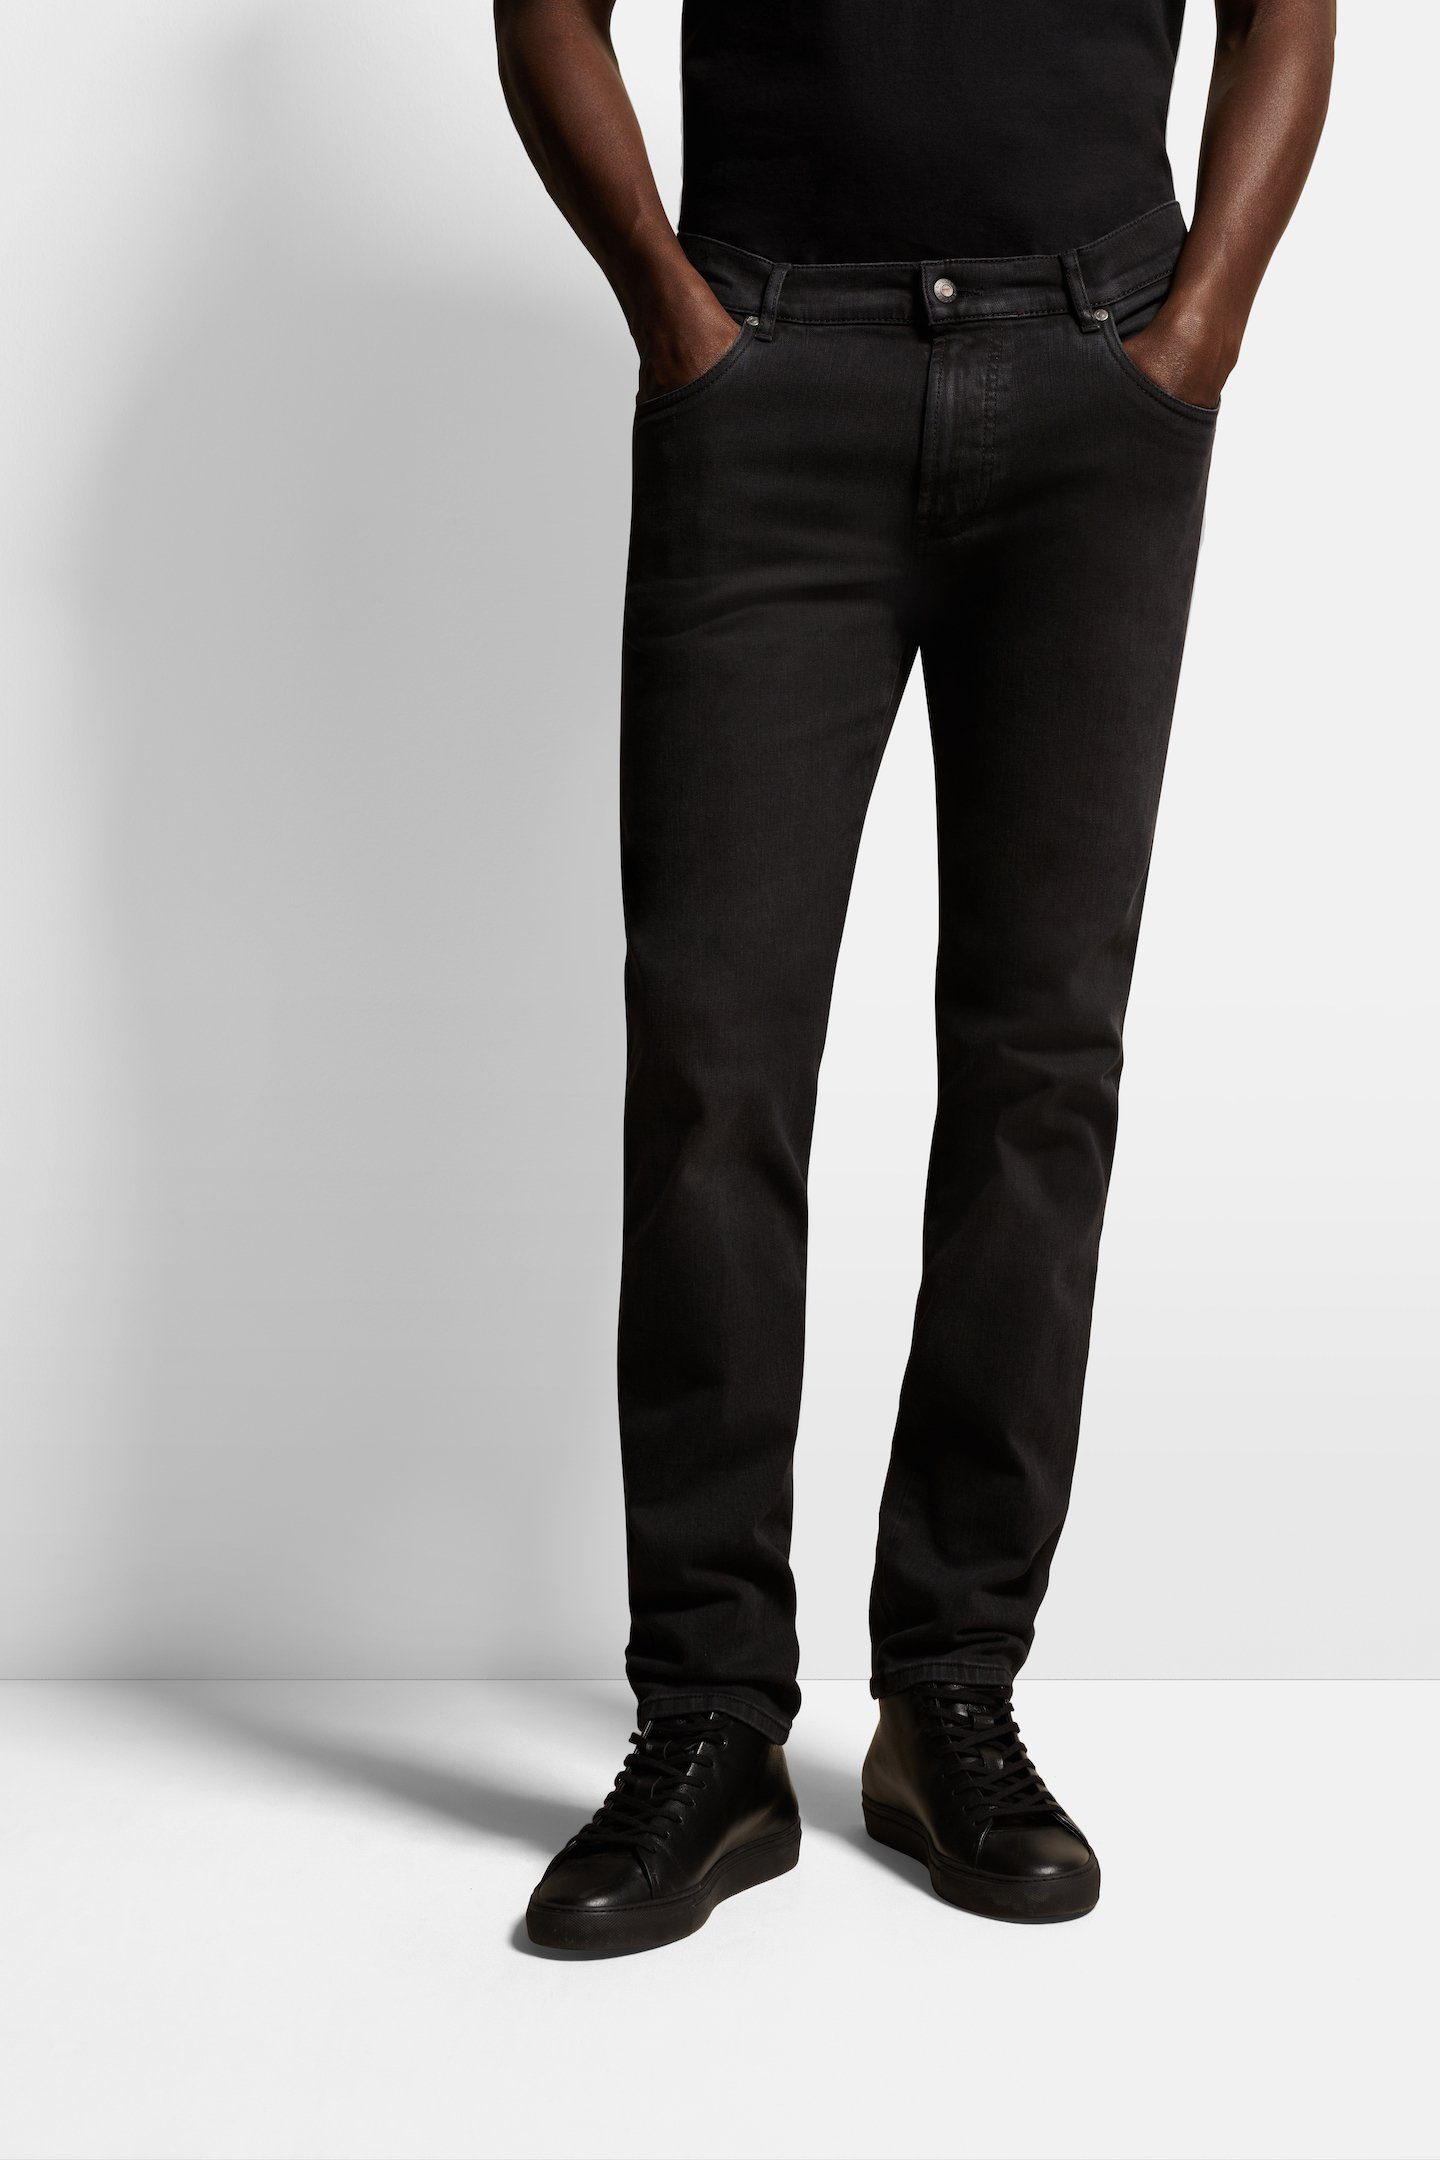 bugatti 5-Pocket-Jeans Flexcity Denim mit hohem Tragekomfort dunkelgrau | Jeans